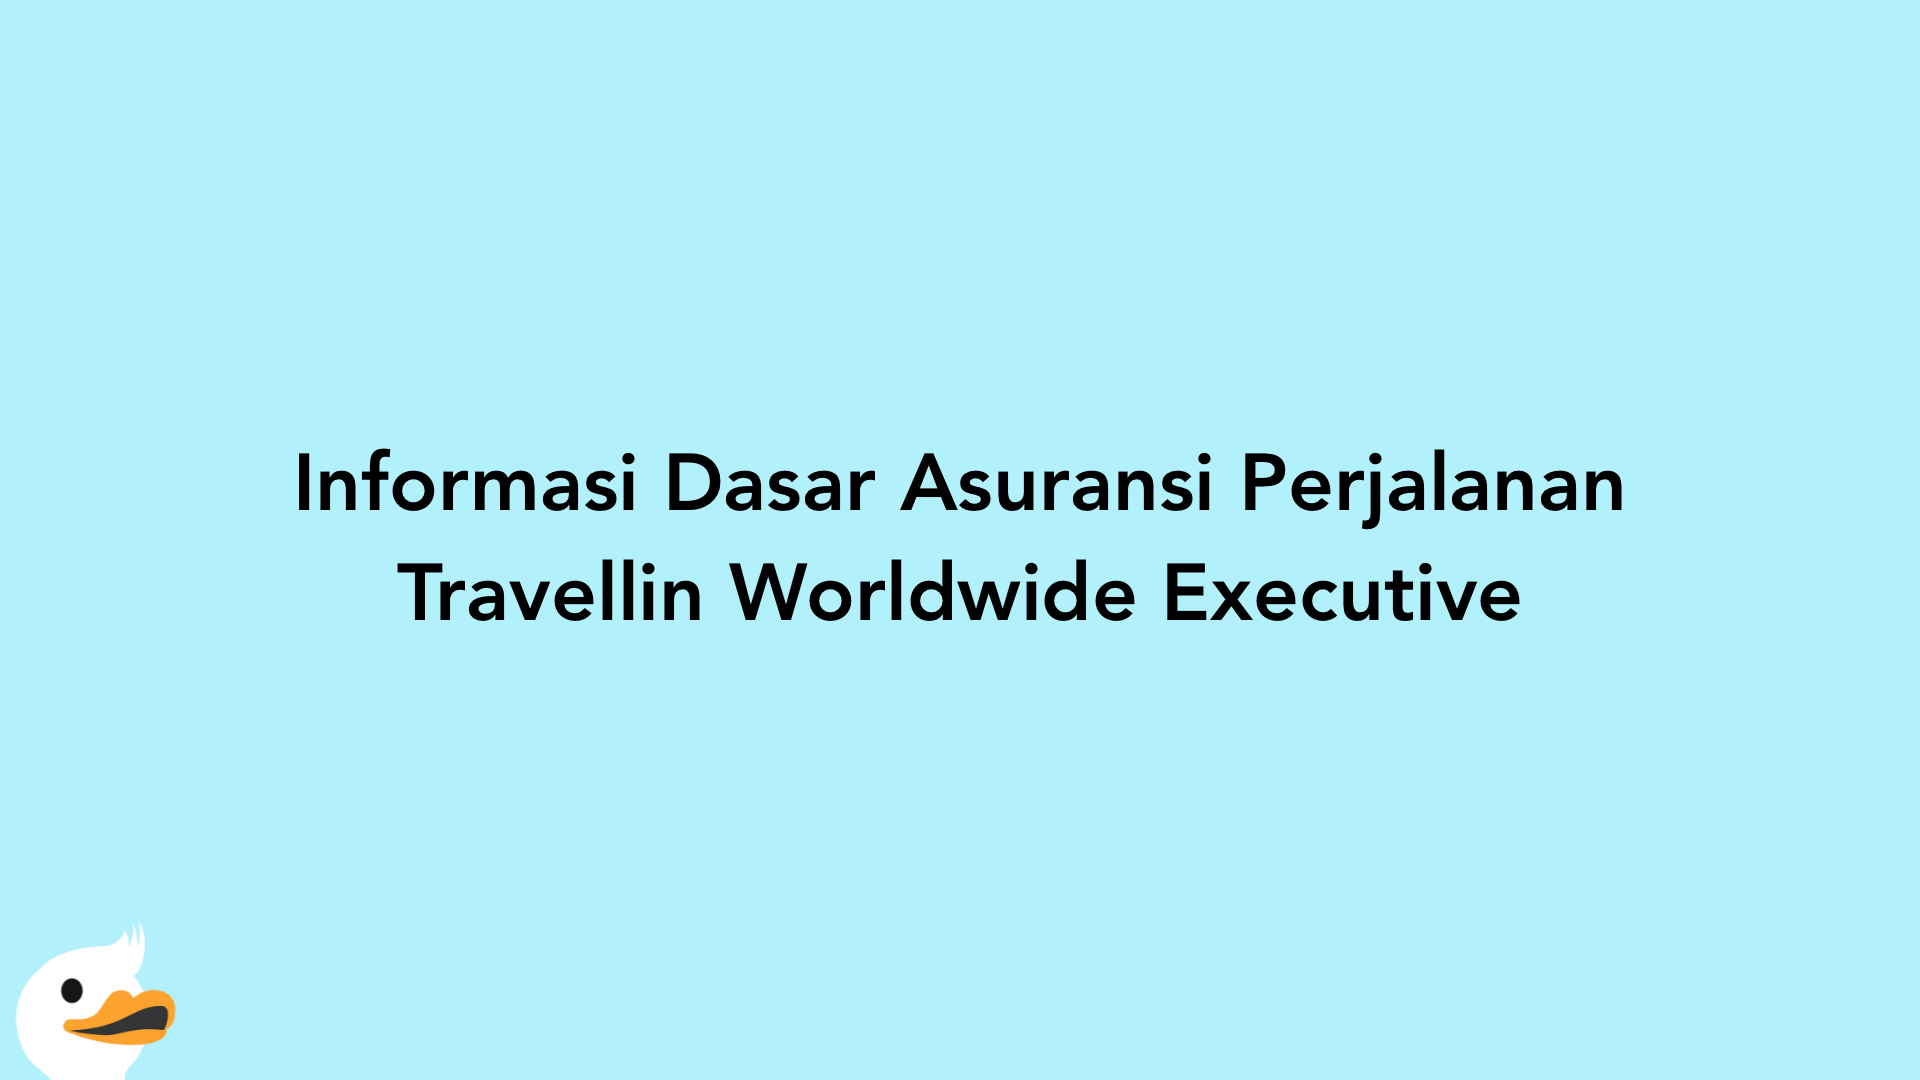 Informasi Dasar Asuransi Perjalanan Travellin Worldwide Executive